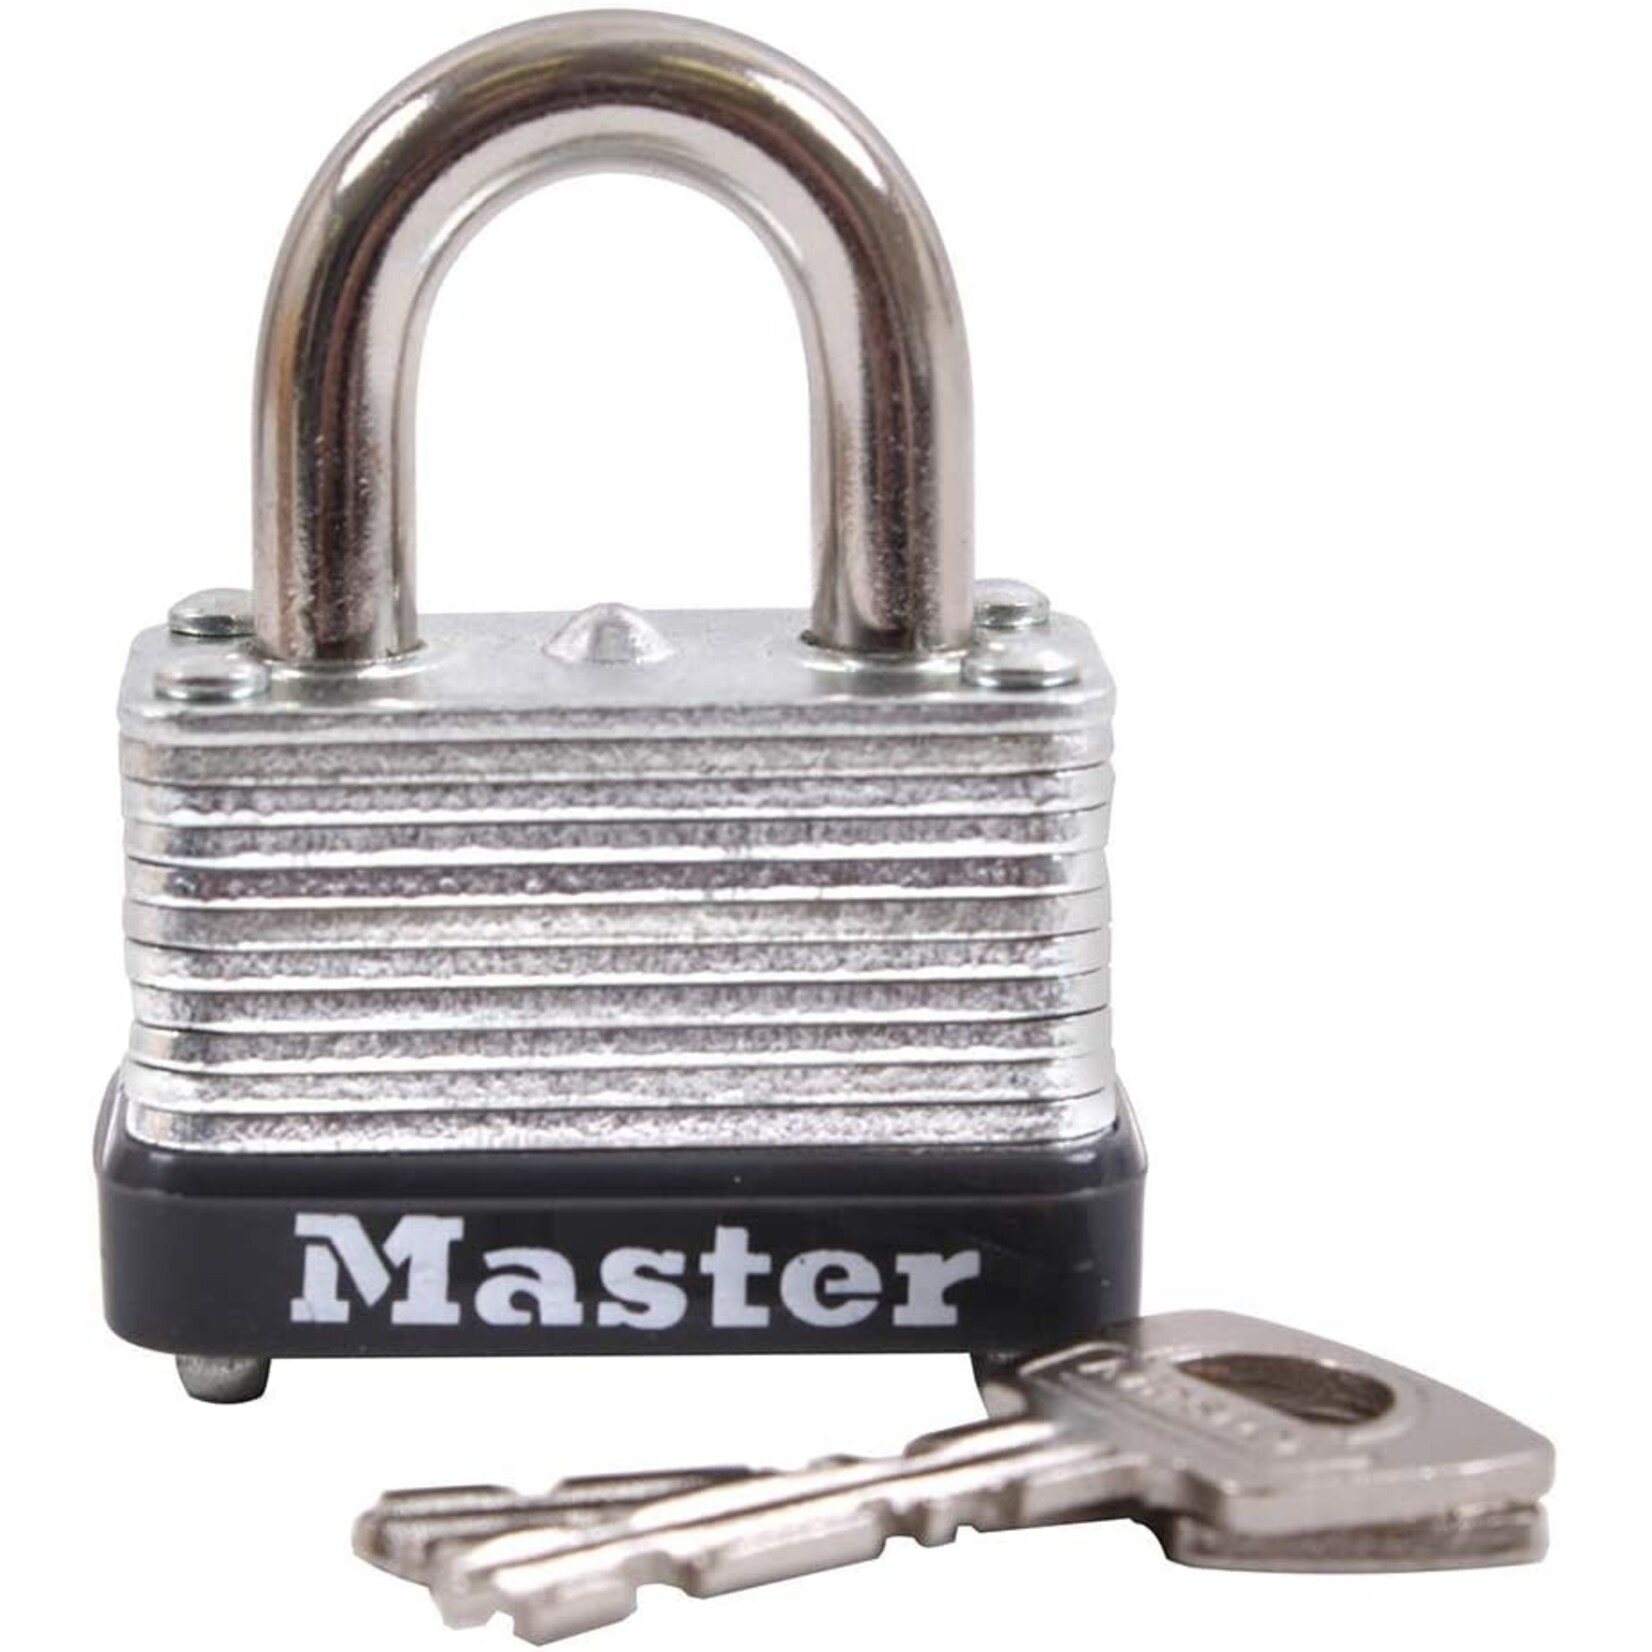 Masterlock Masterlock 1-1/2'' Wide Warded Padlock